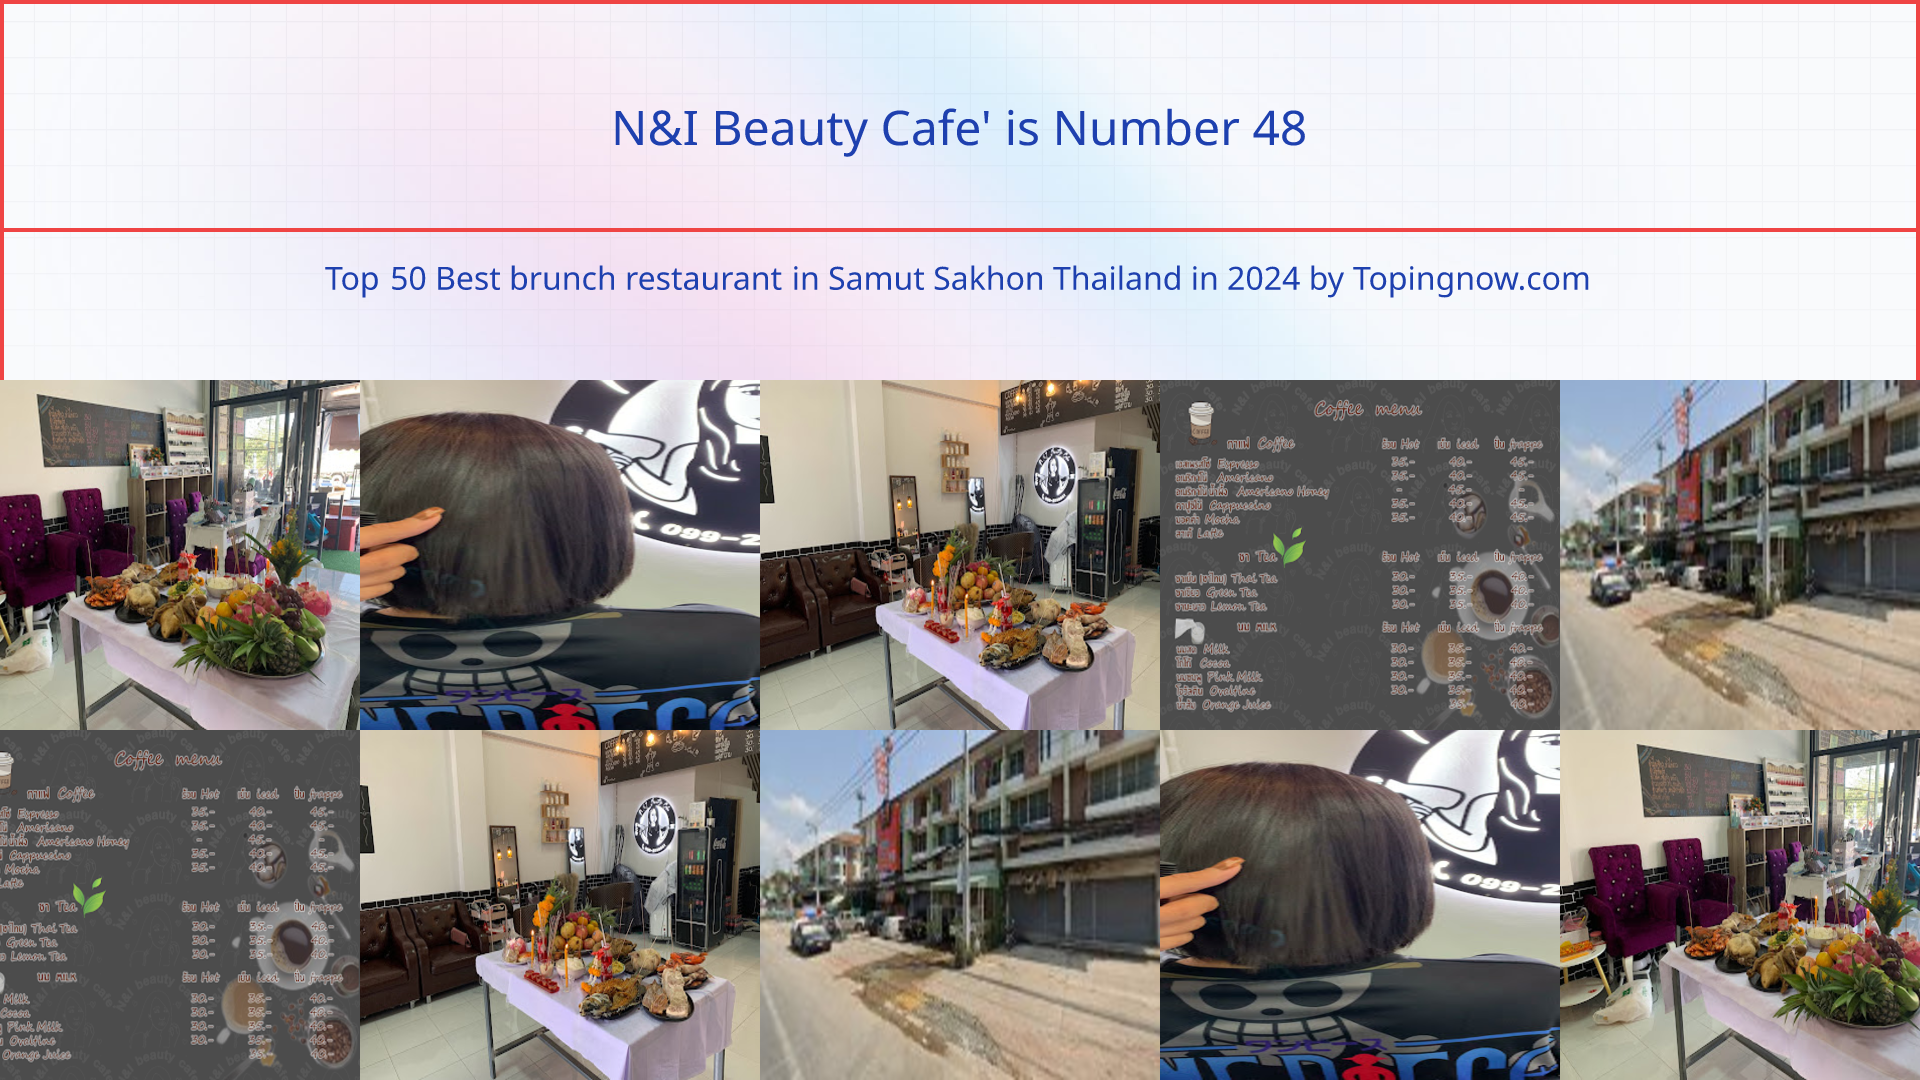 N&I Beauty Cafe': Top 50 Best brunch restaurant in Samut Sakhon Thailand in 2024